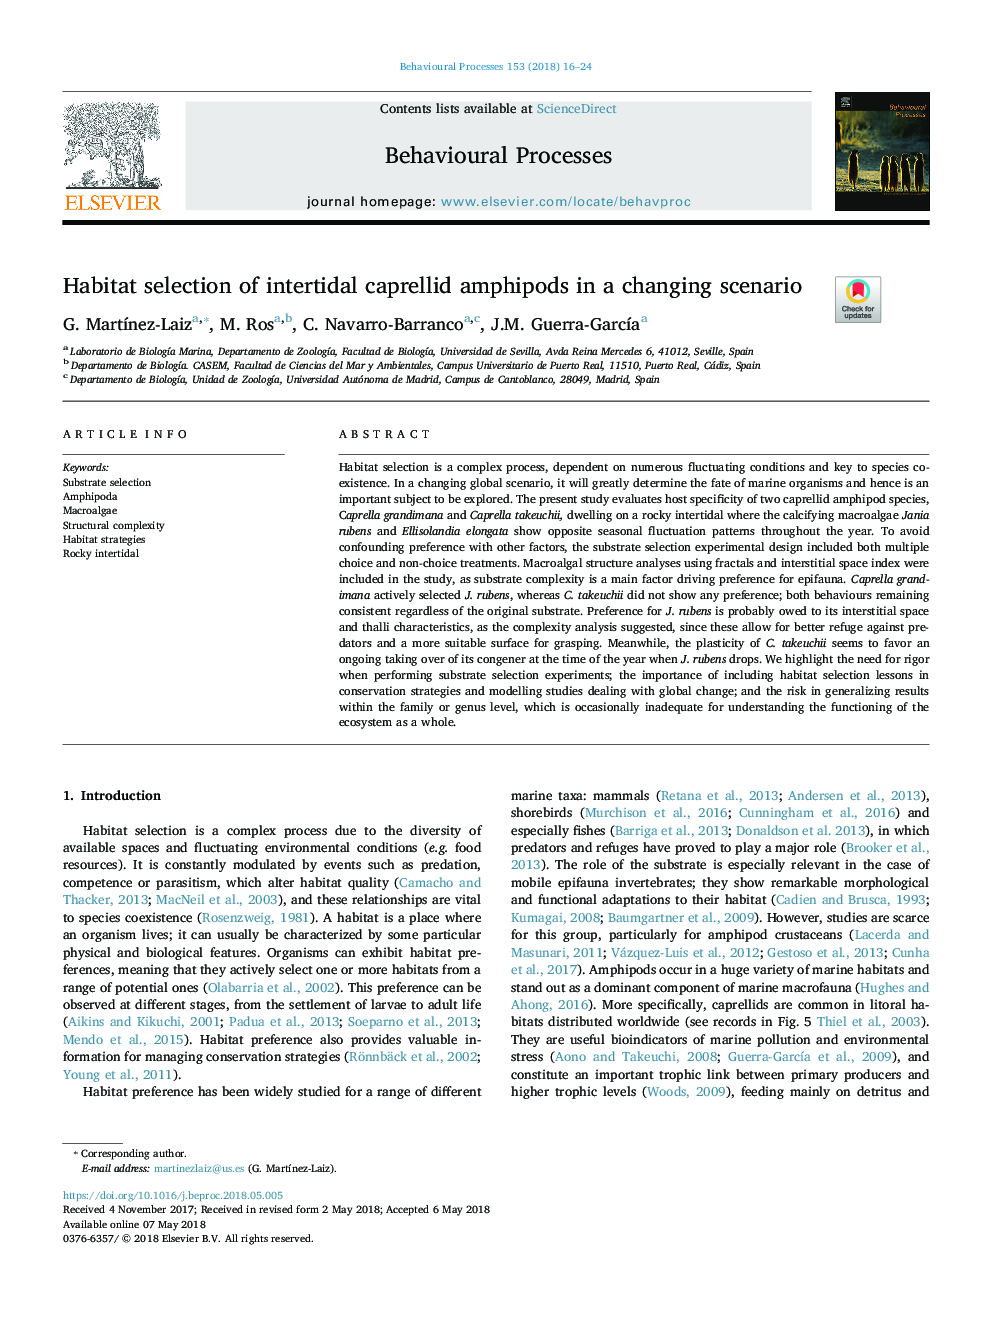 Habitat selection of intertidal caprellid amphipods in a changing scenario